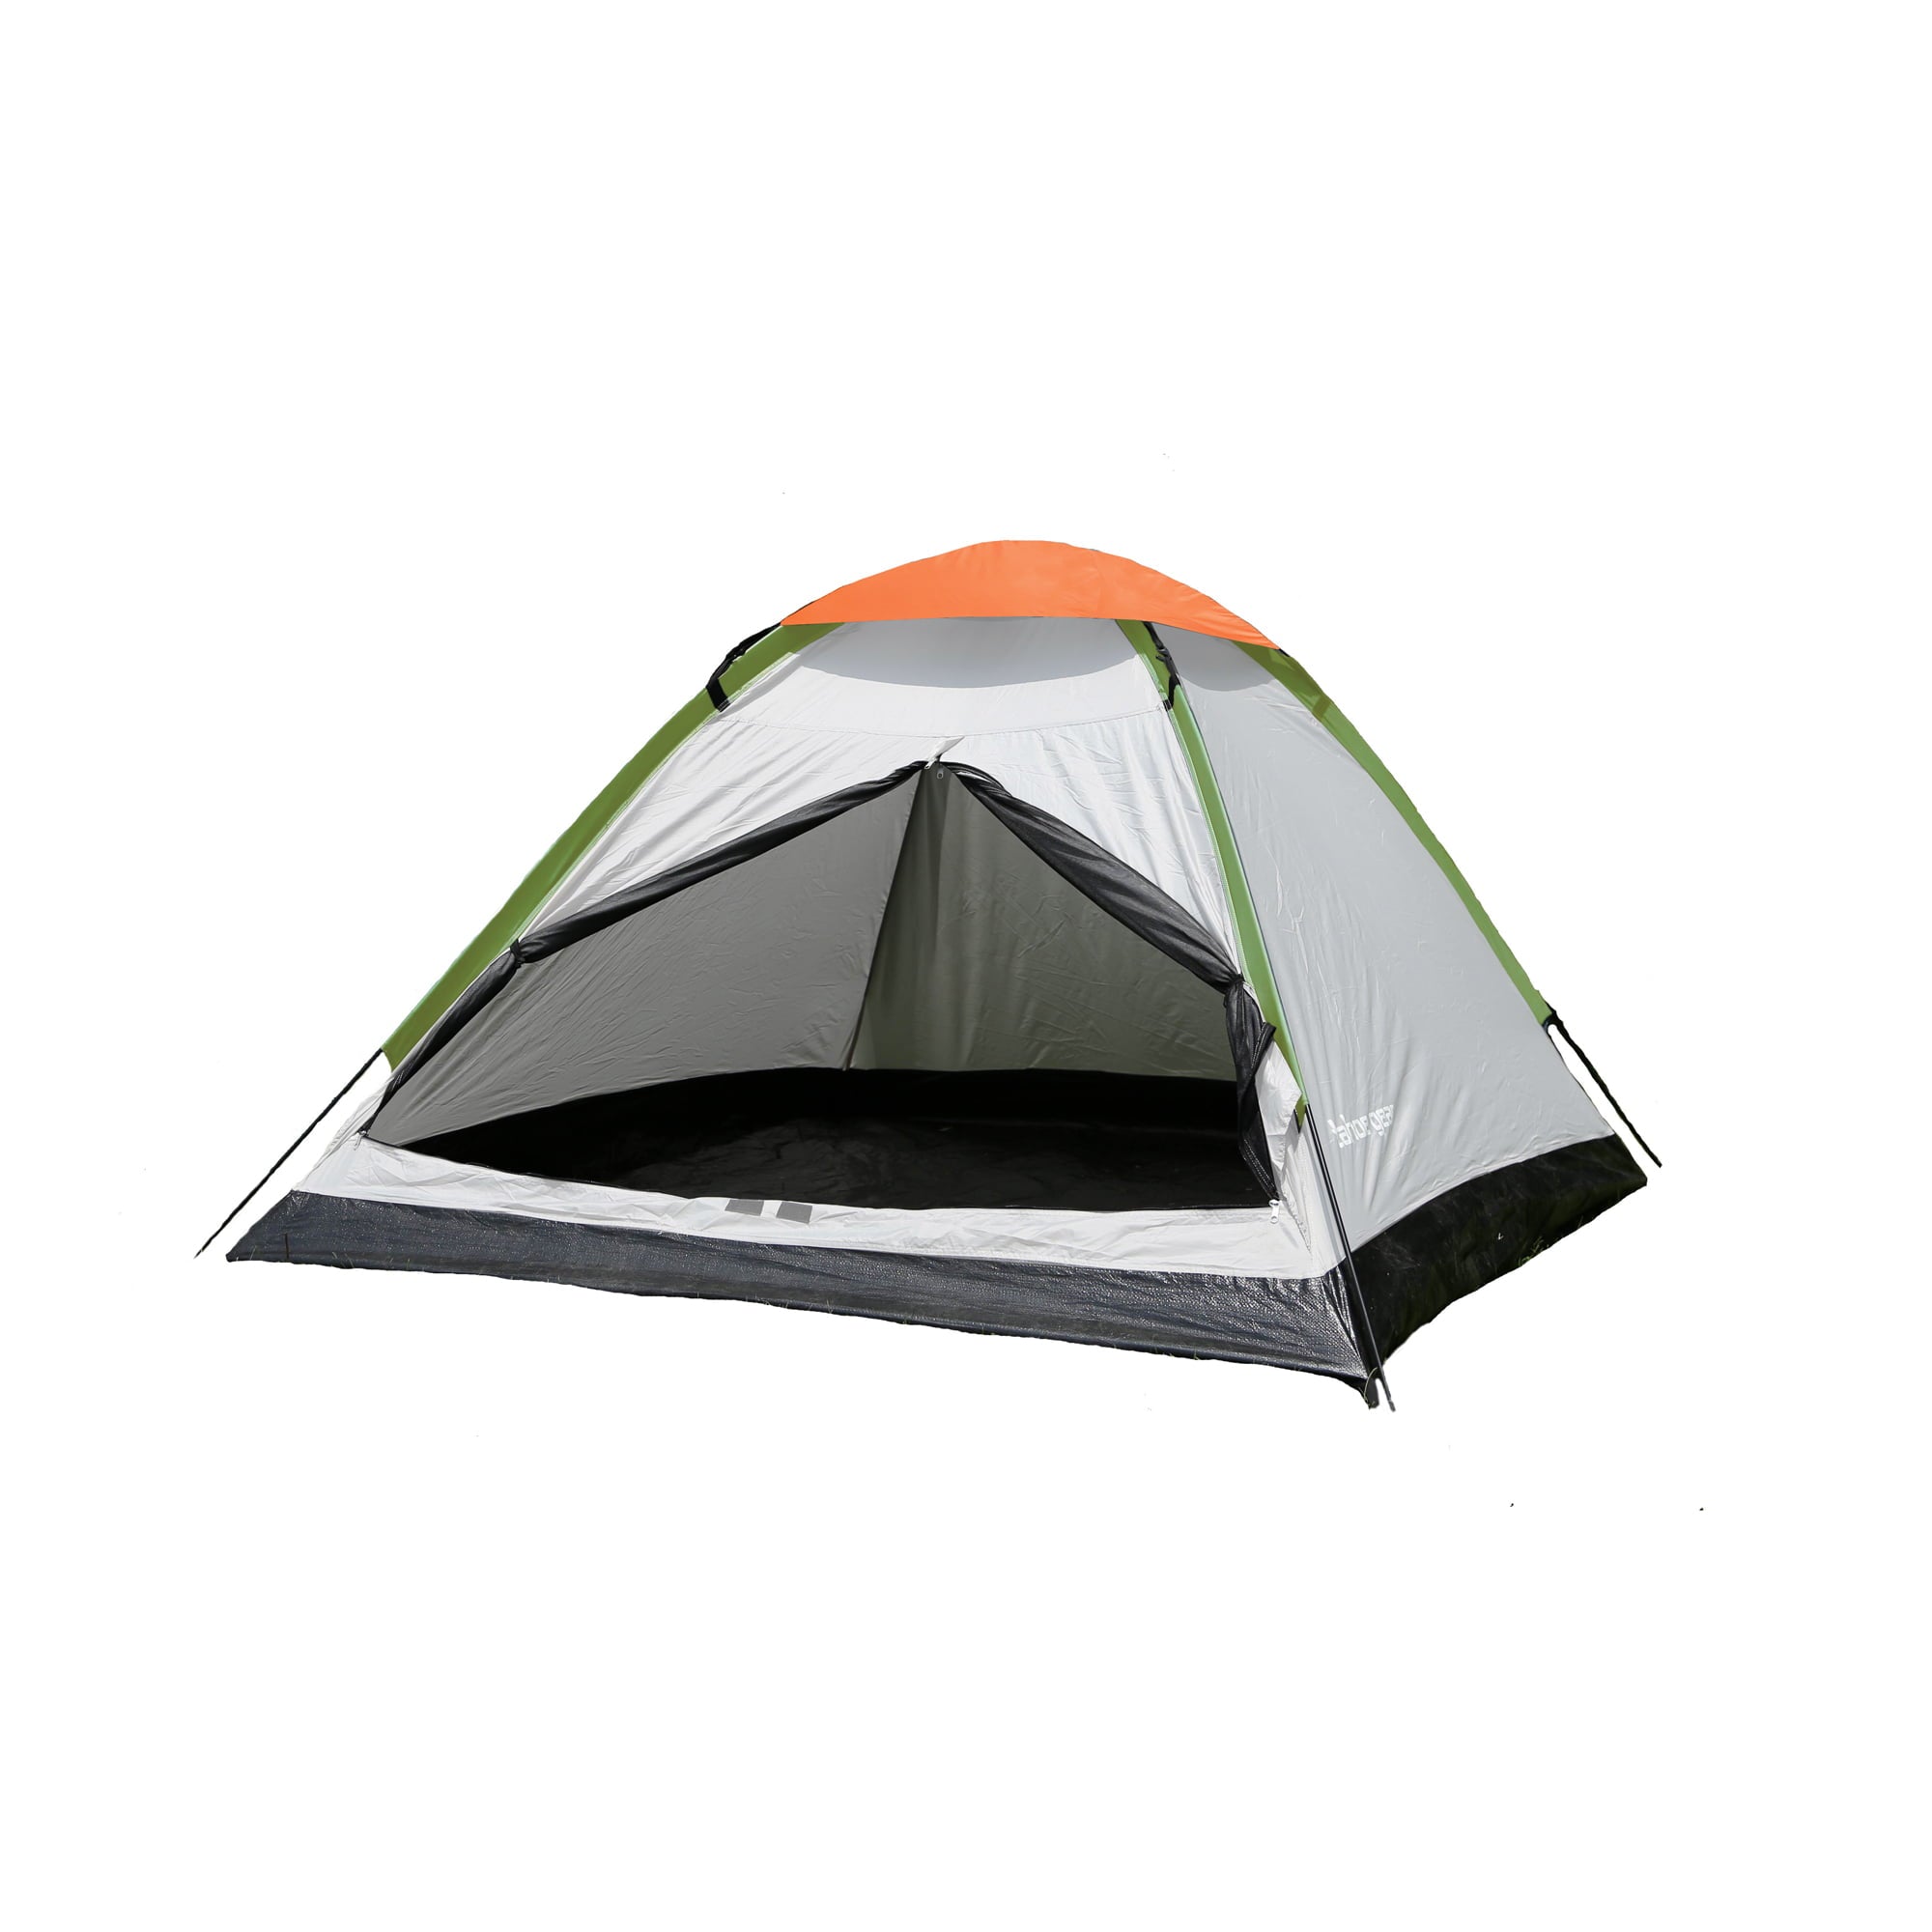 Restored Tahoe Gear Willow 2 Person 3 Season Waterproof Camping Hiking Tent (Refurbished)